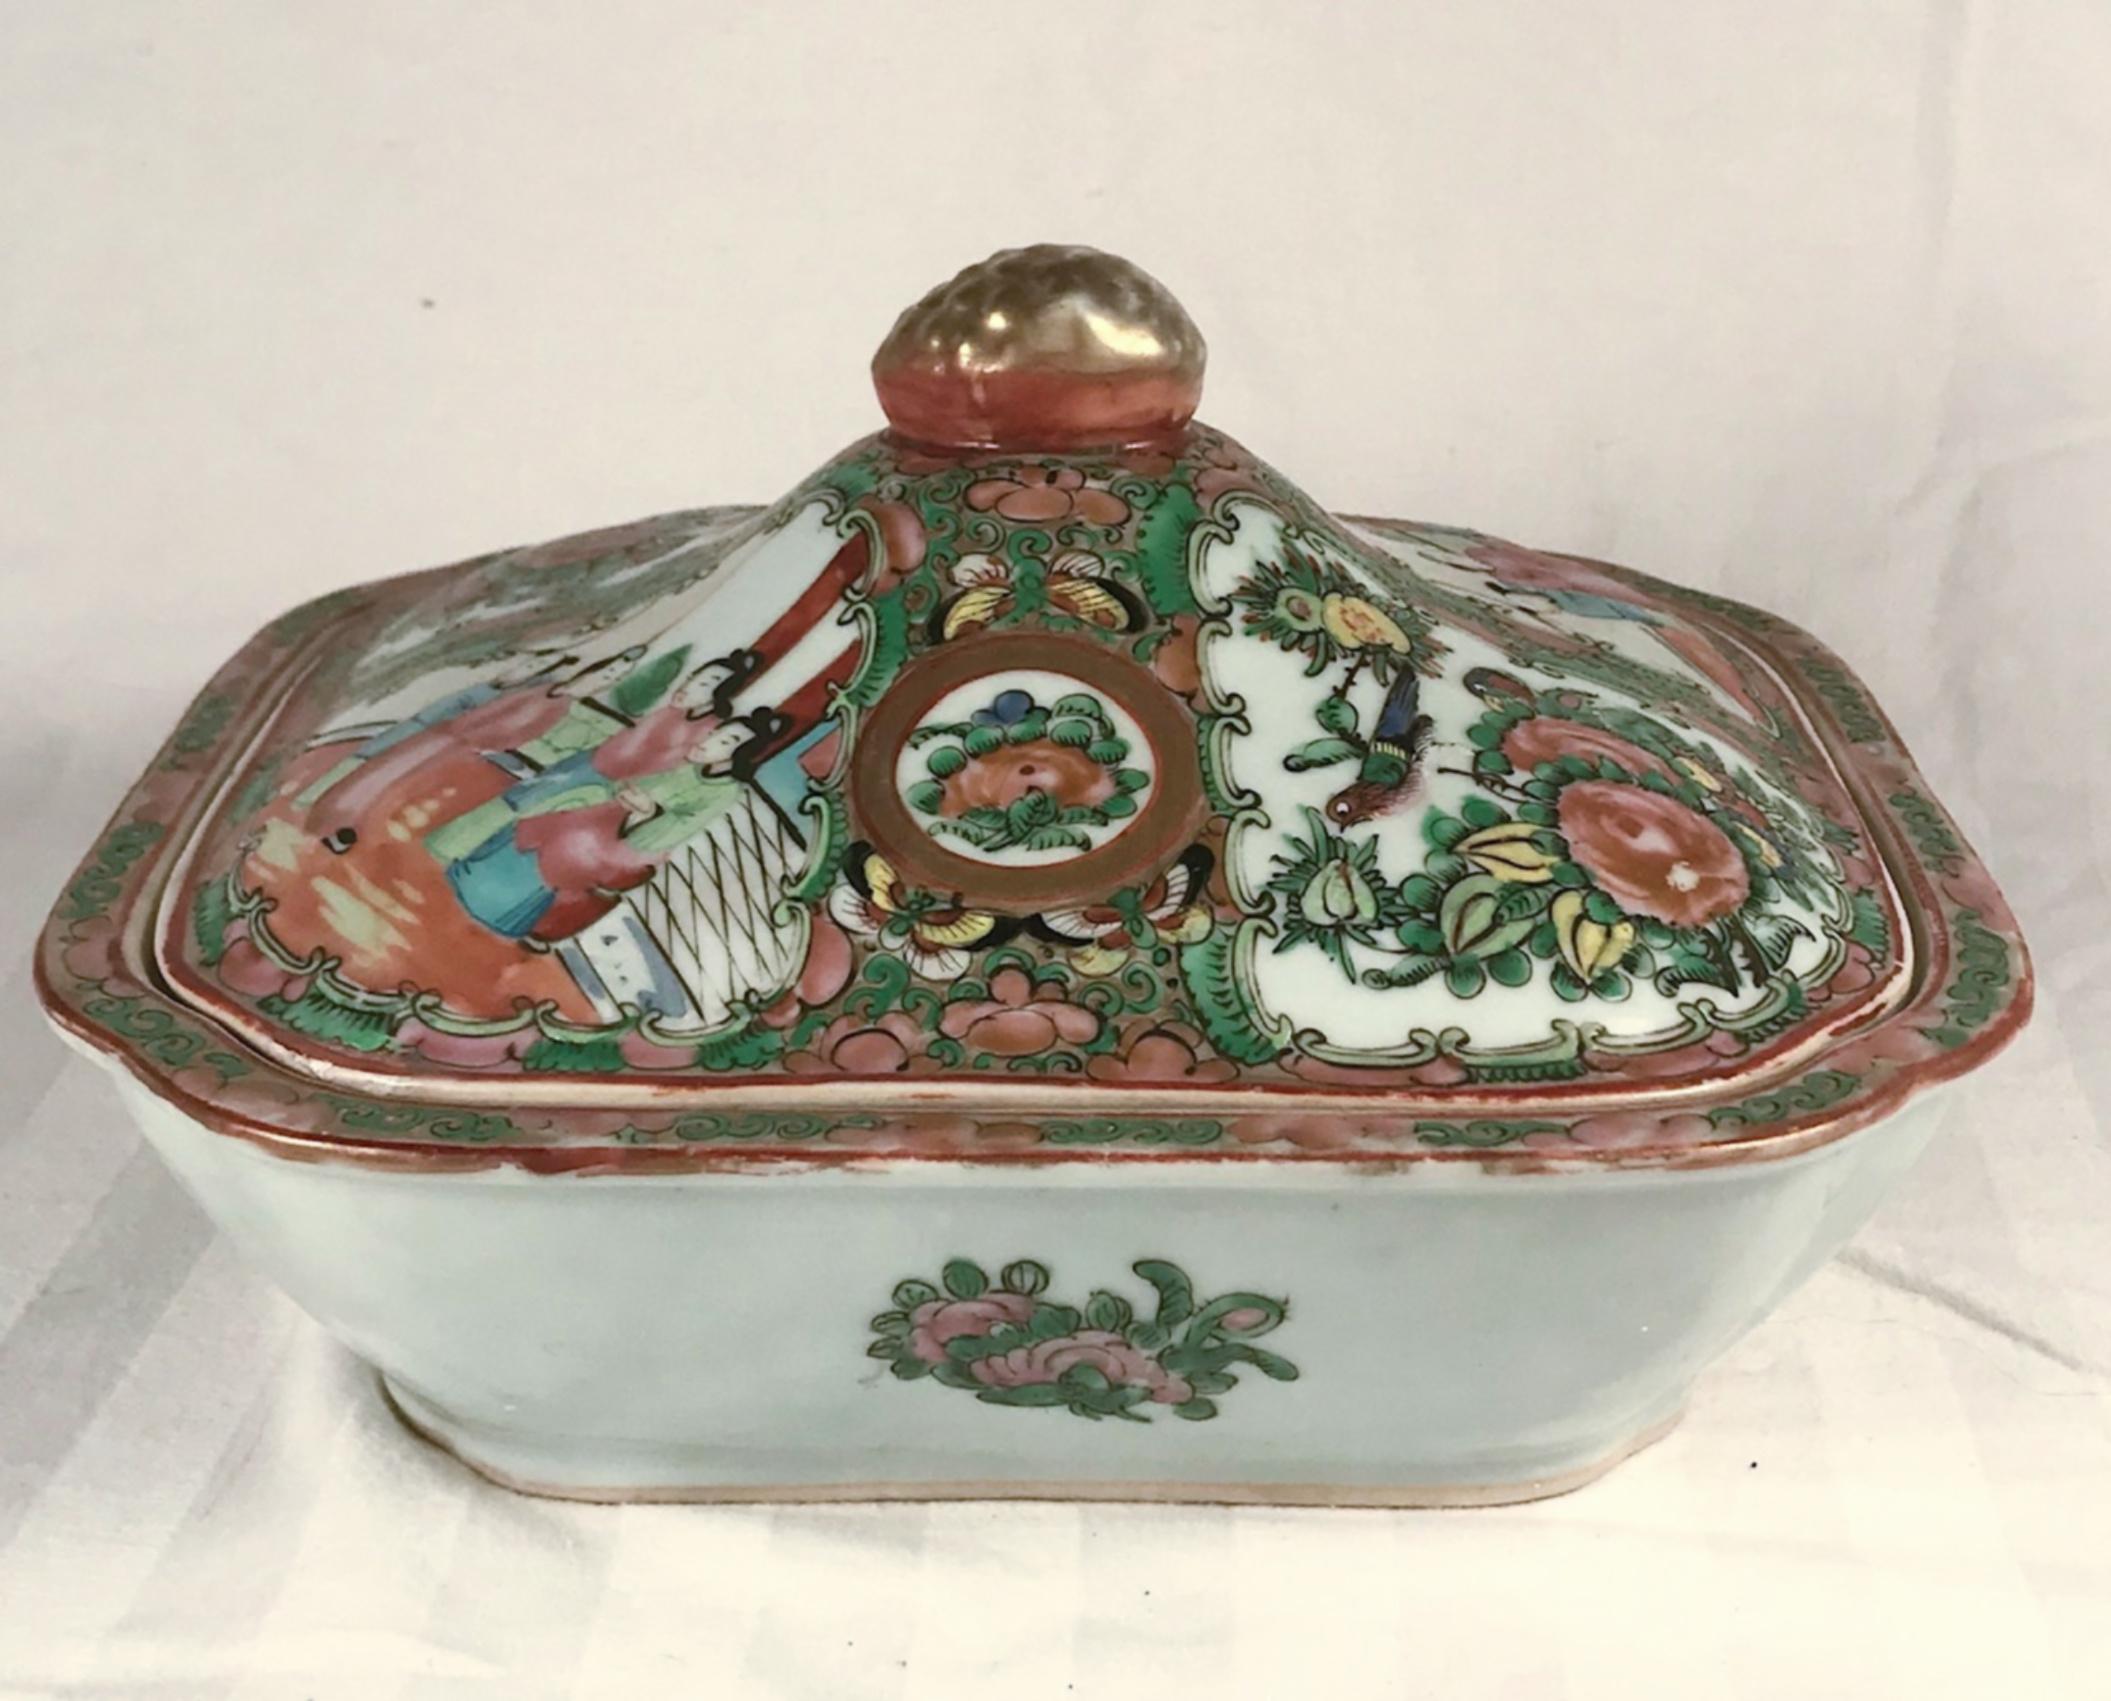 Enameled 19th Century Rose Medallion Chinese Export Porcelain Covered Dish, Tureen